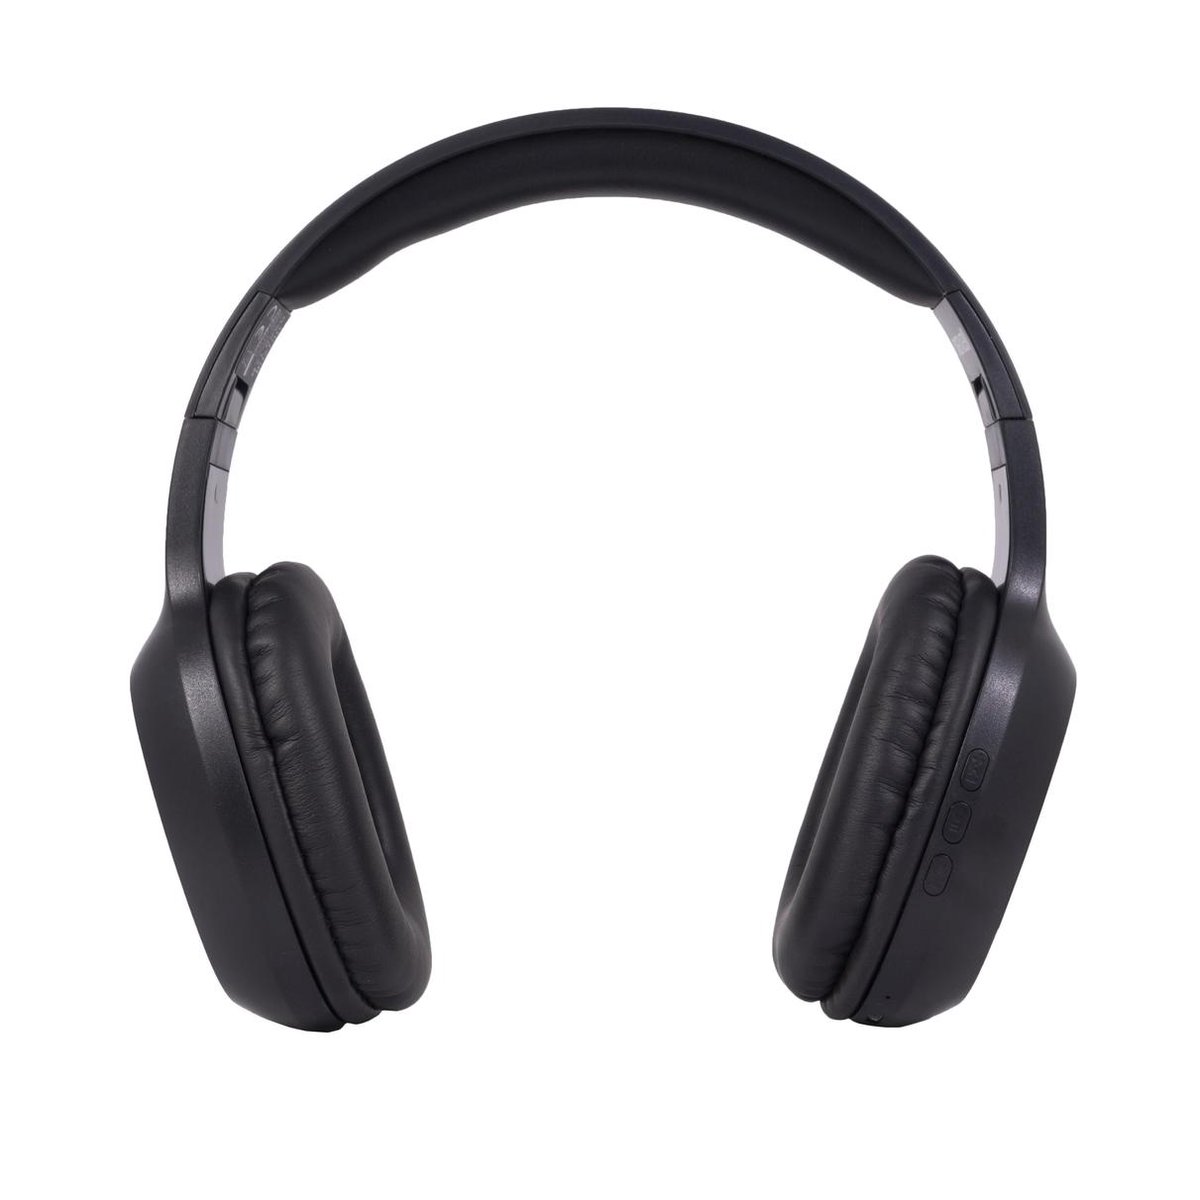 Maxell bluetooth headphone bass 13 - HD1 black.